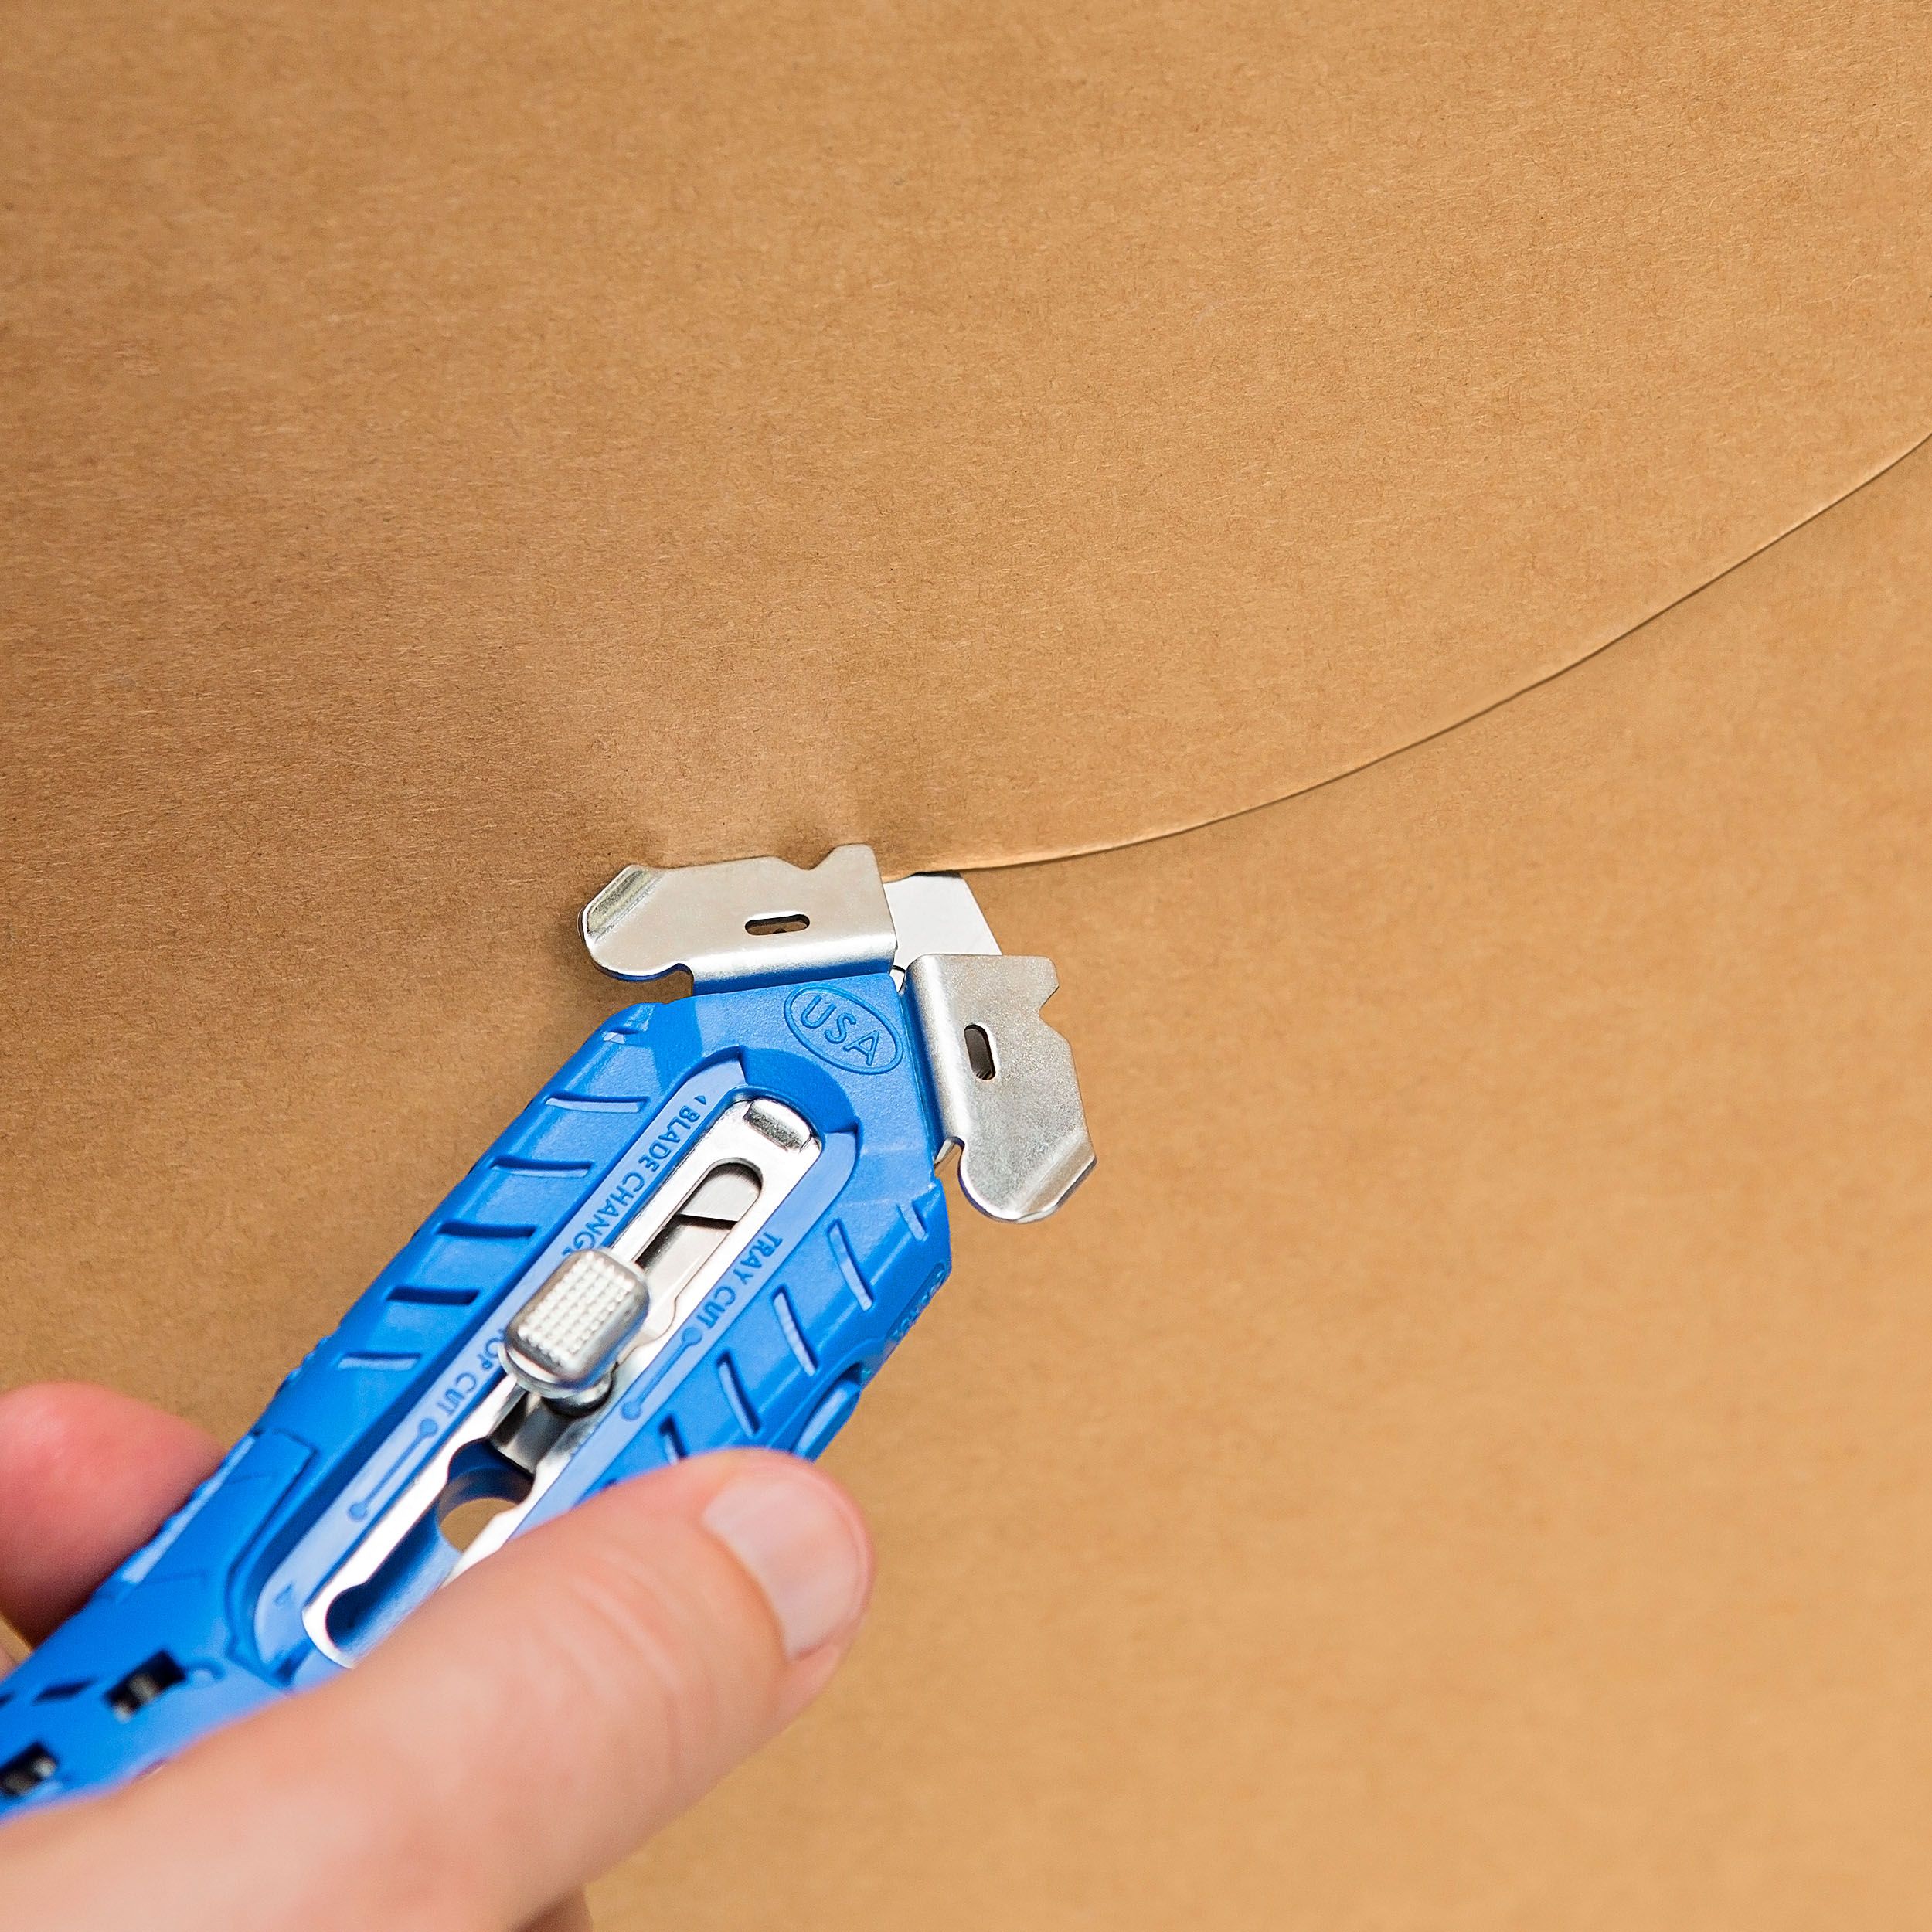 S8 Safety Cutter Cuts Cardboard